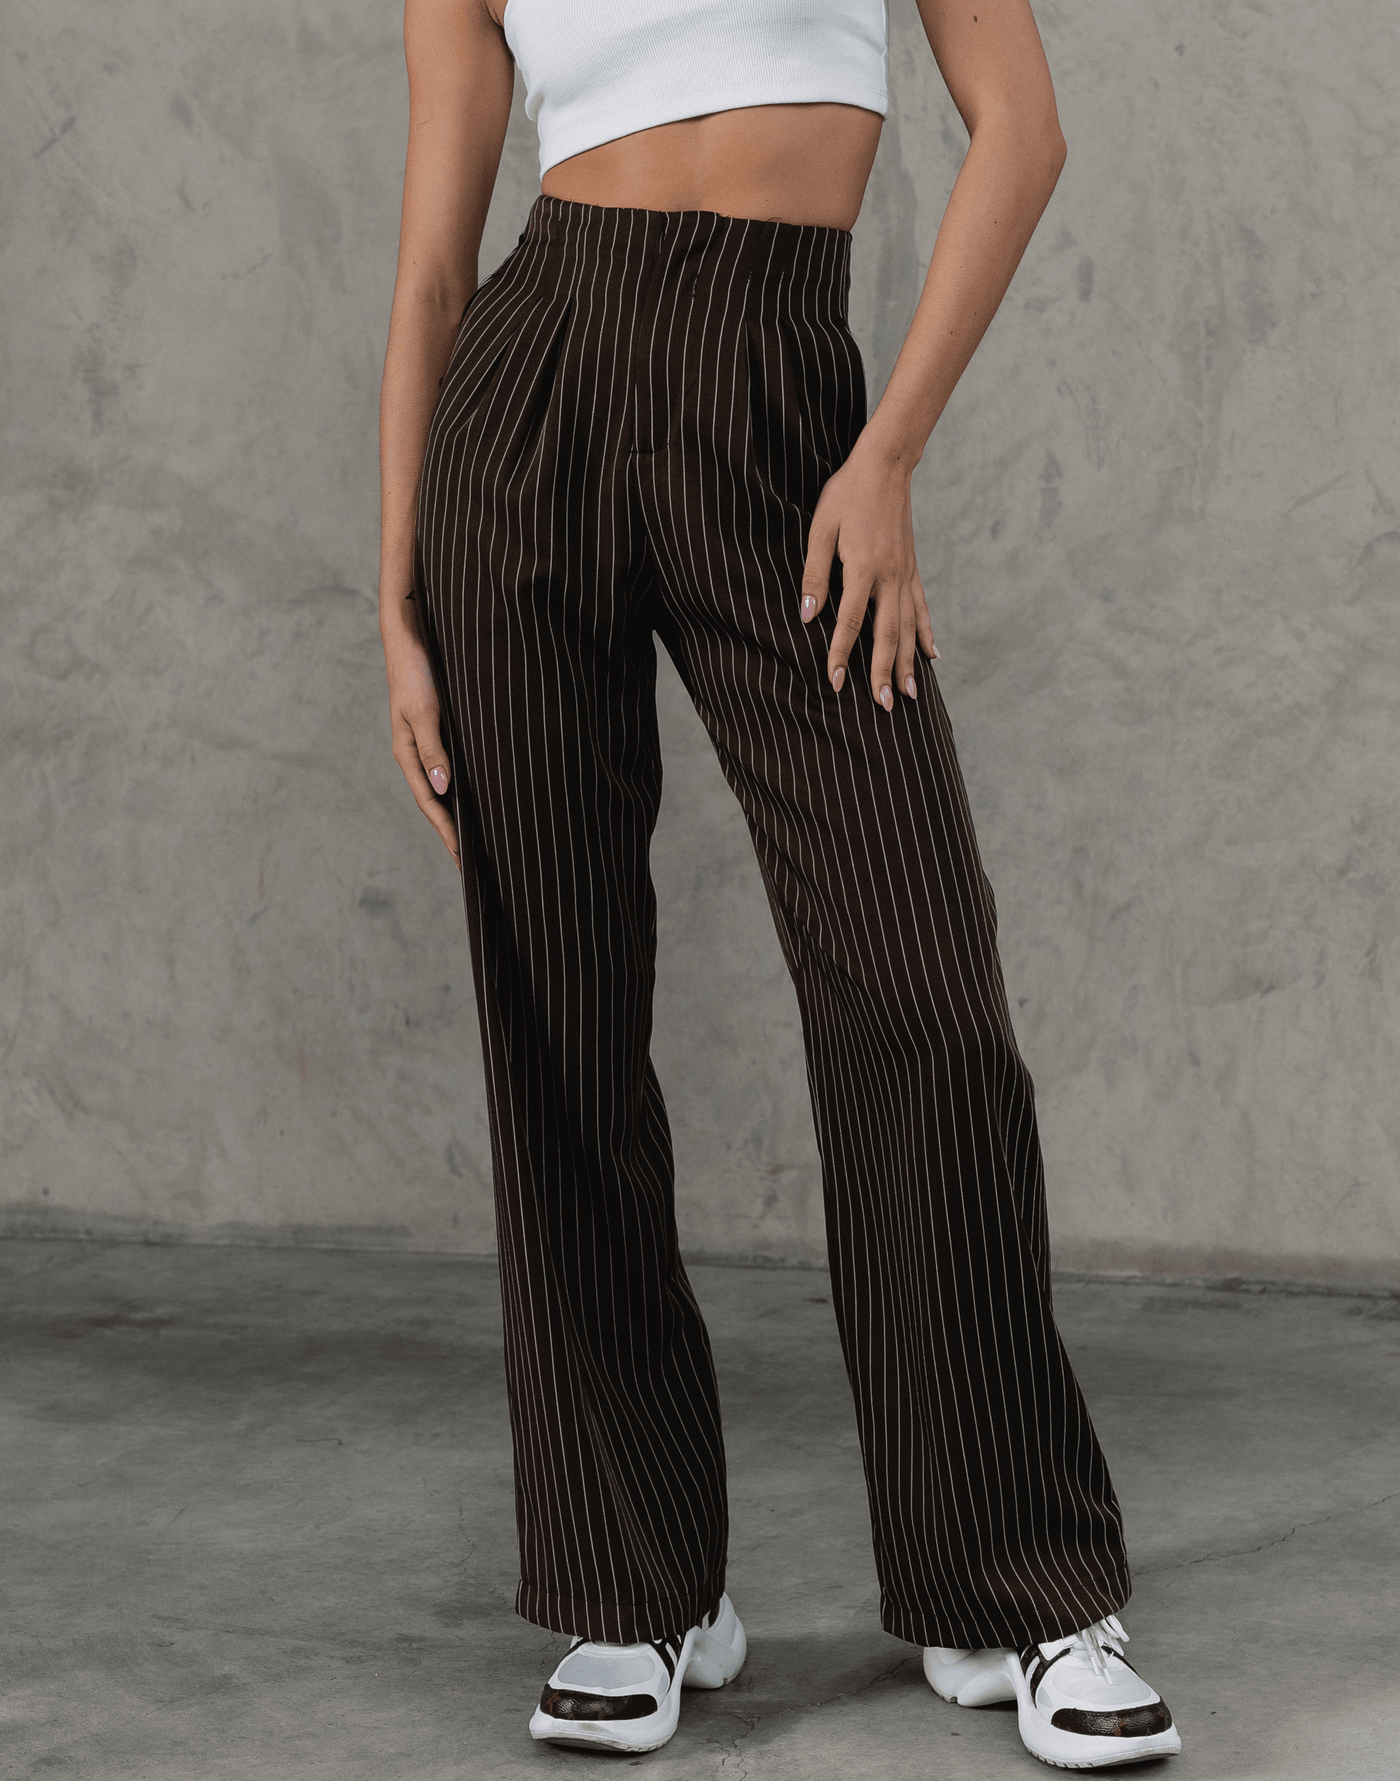 Calabasas Pants (Brown) - Brown Pinstripe High Waisted Pants - Women's Pants - Charcoal Clothing